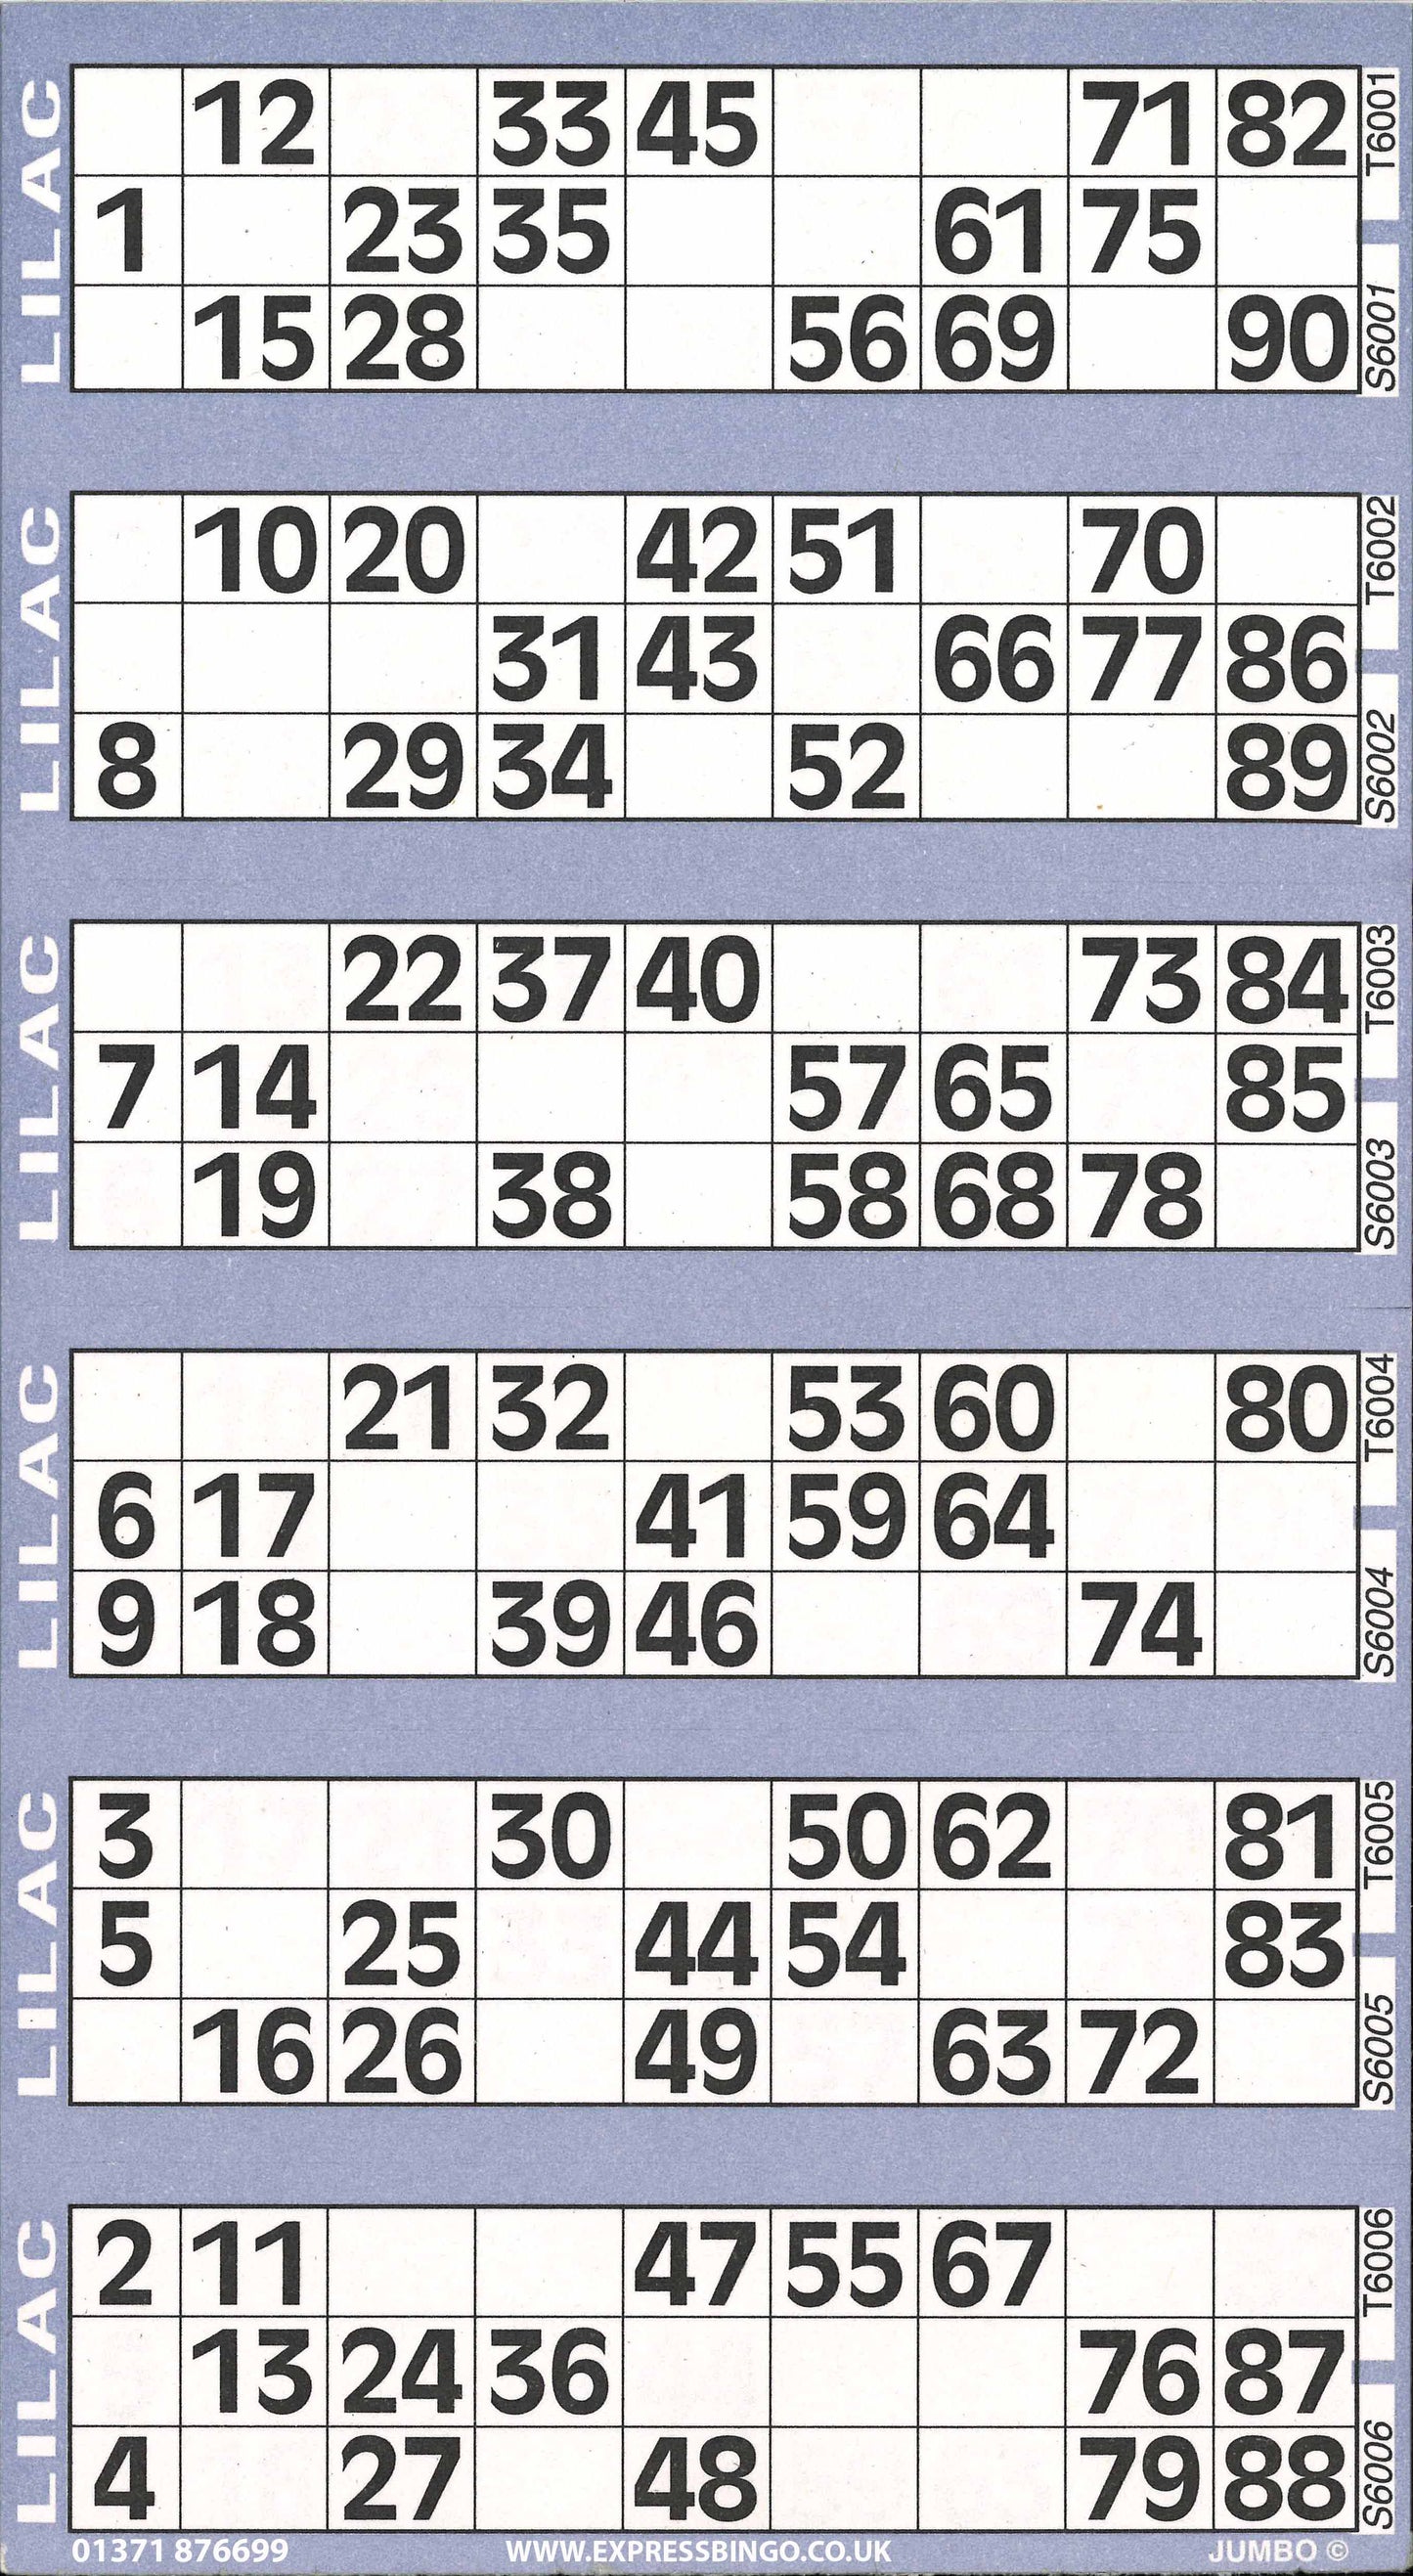 Bingo Flyer Pads - 6 to View